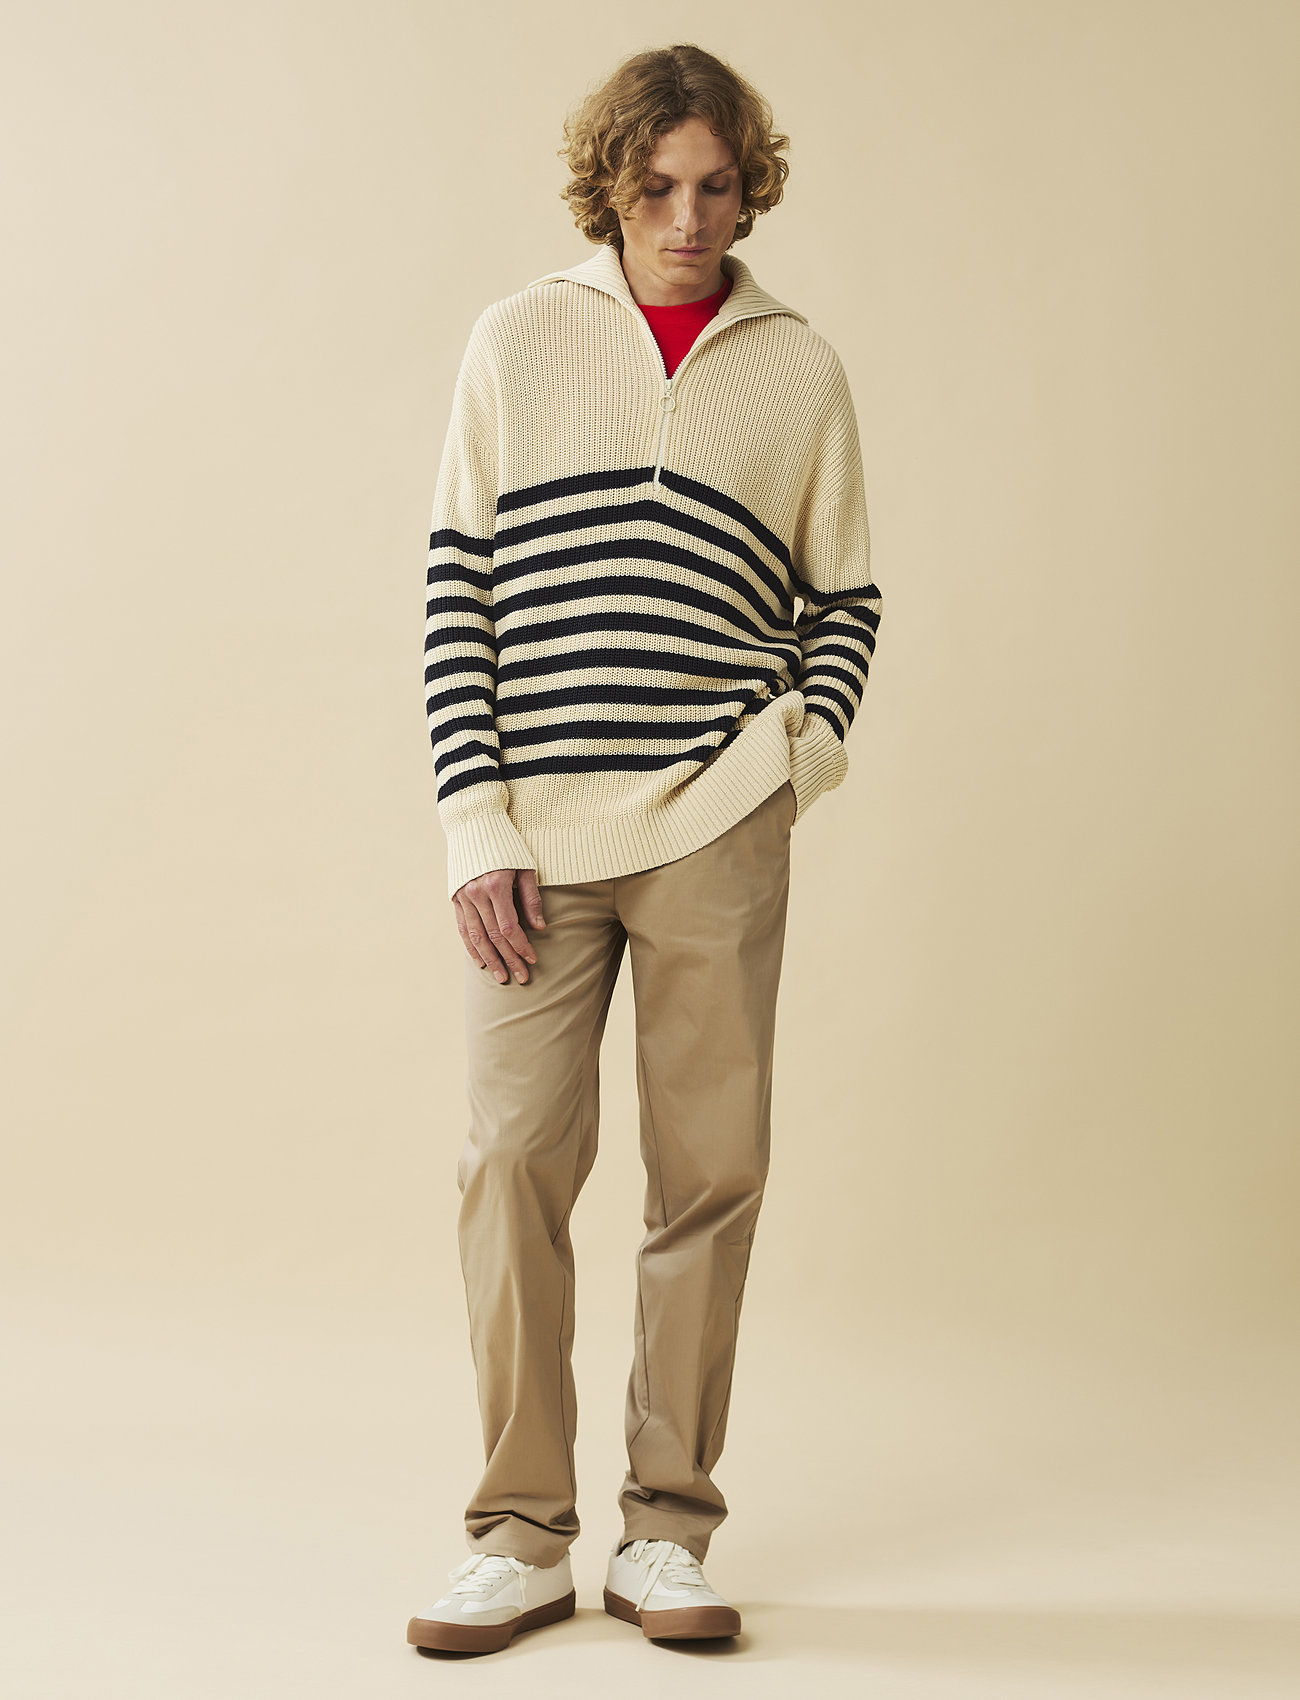 Lexington Clothing - Tom Dry Cotton Half-Zip Sweater - män - dk blue/white stripe - 1